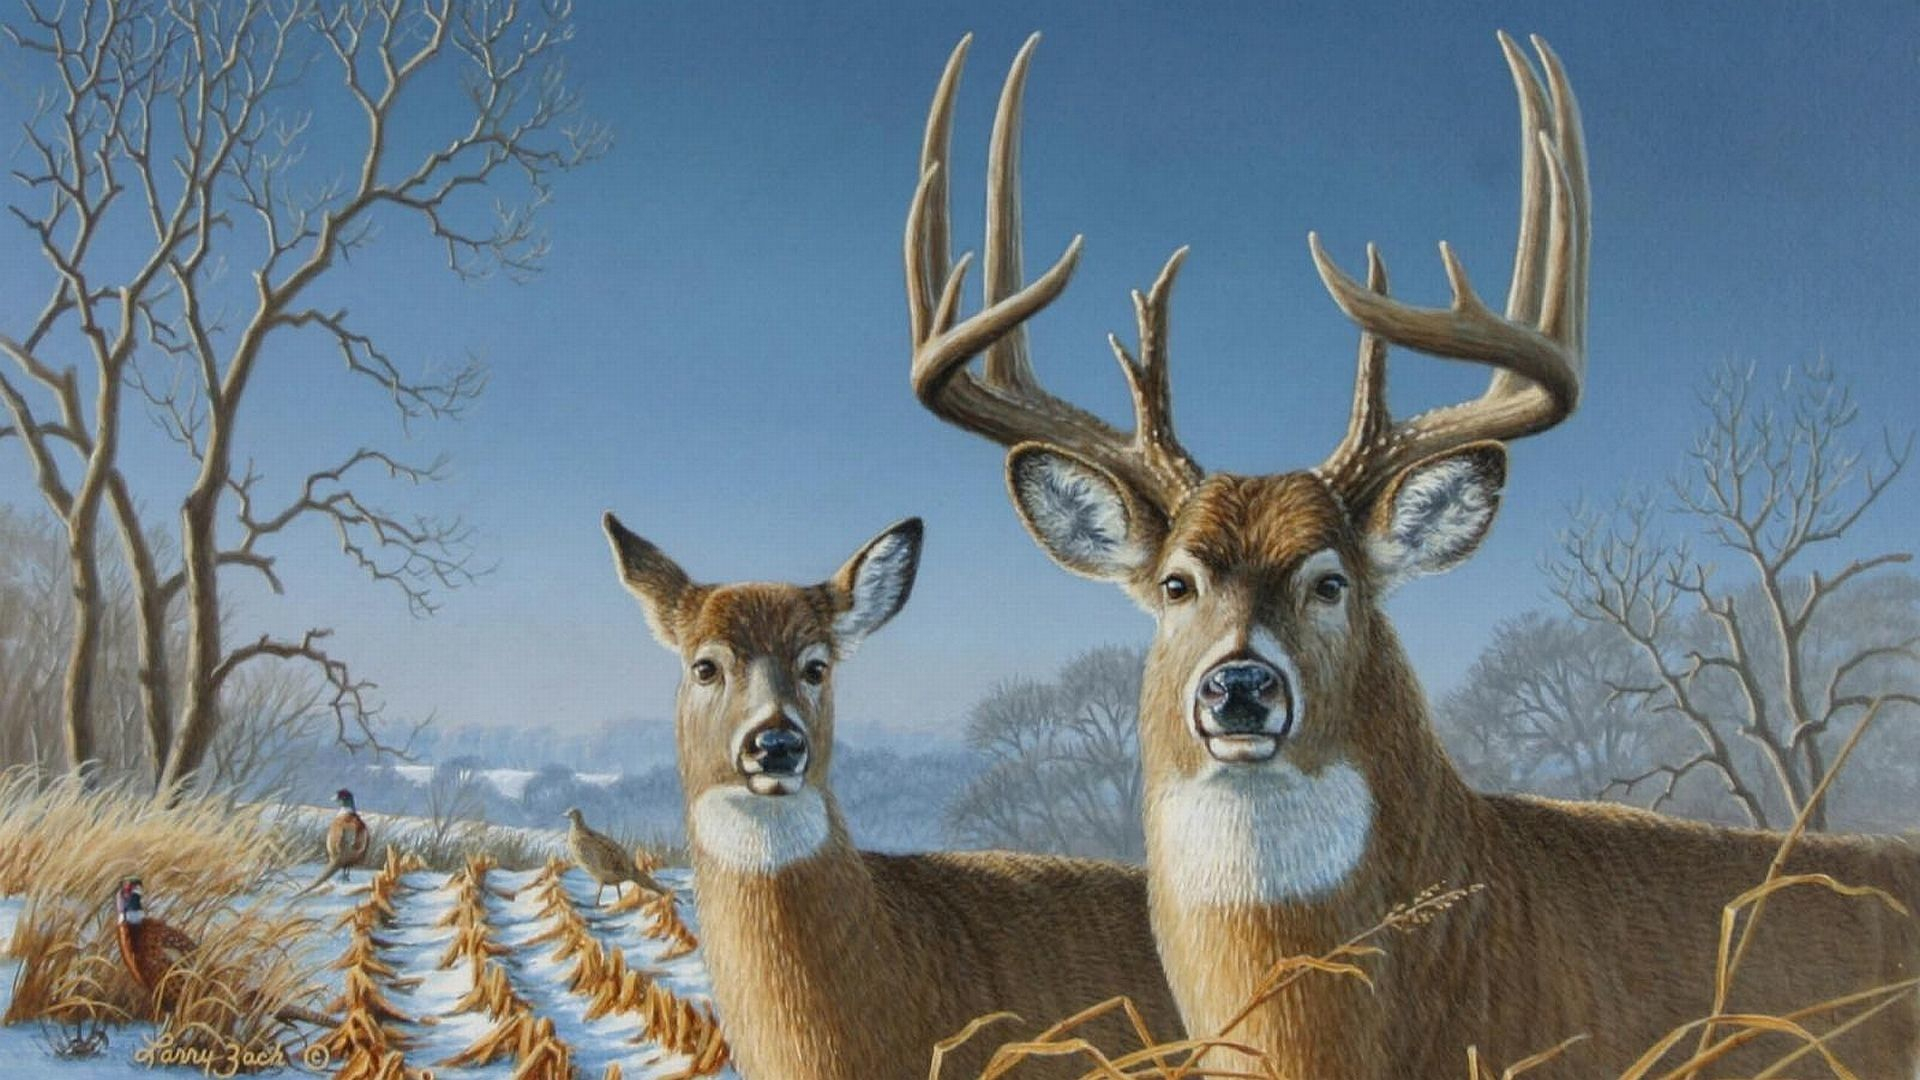 1920x1080 Image result for whitetail deer buck and doe | Whitetail deer pictures, Deer wallpaper, Whitetail deer